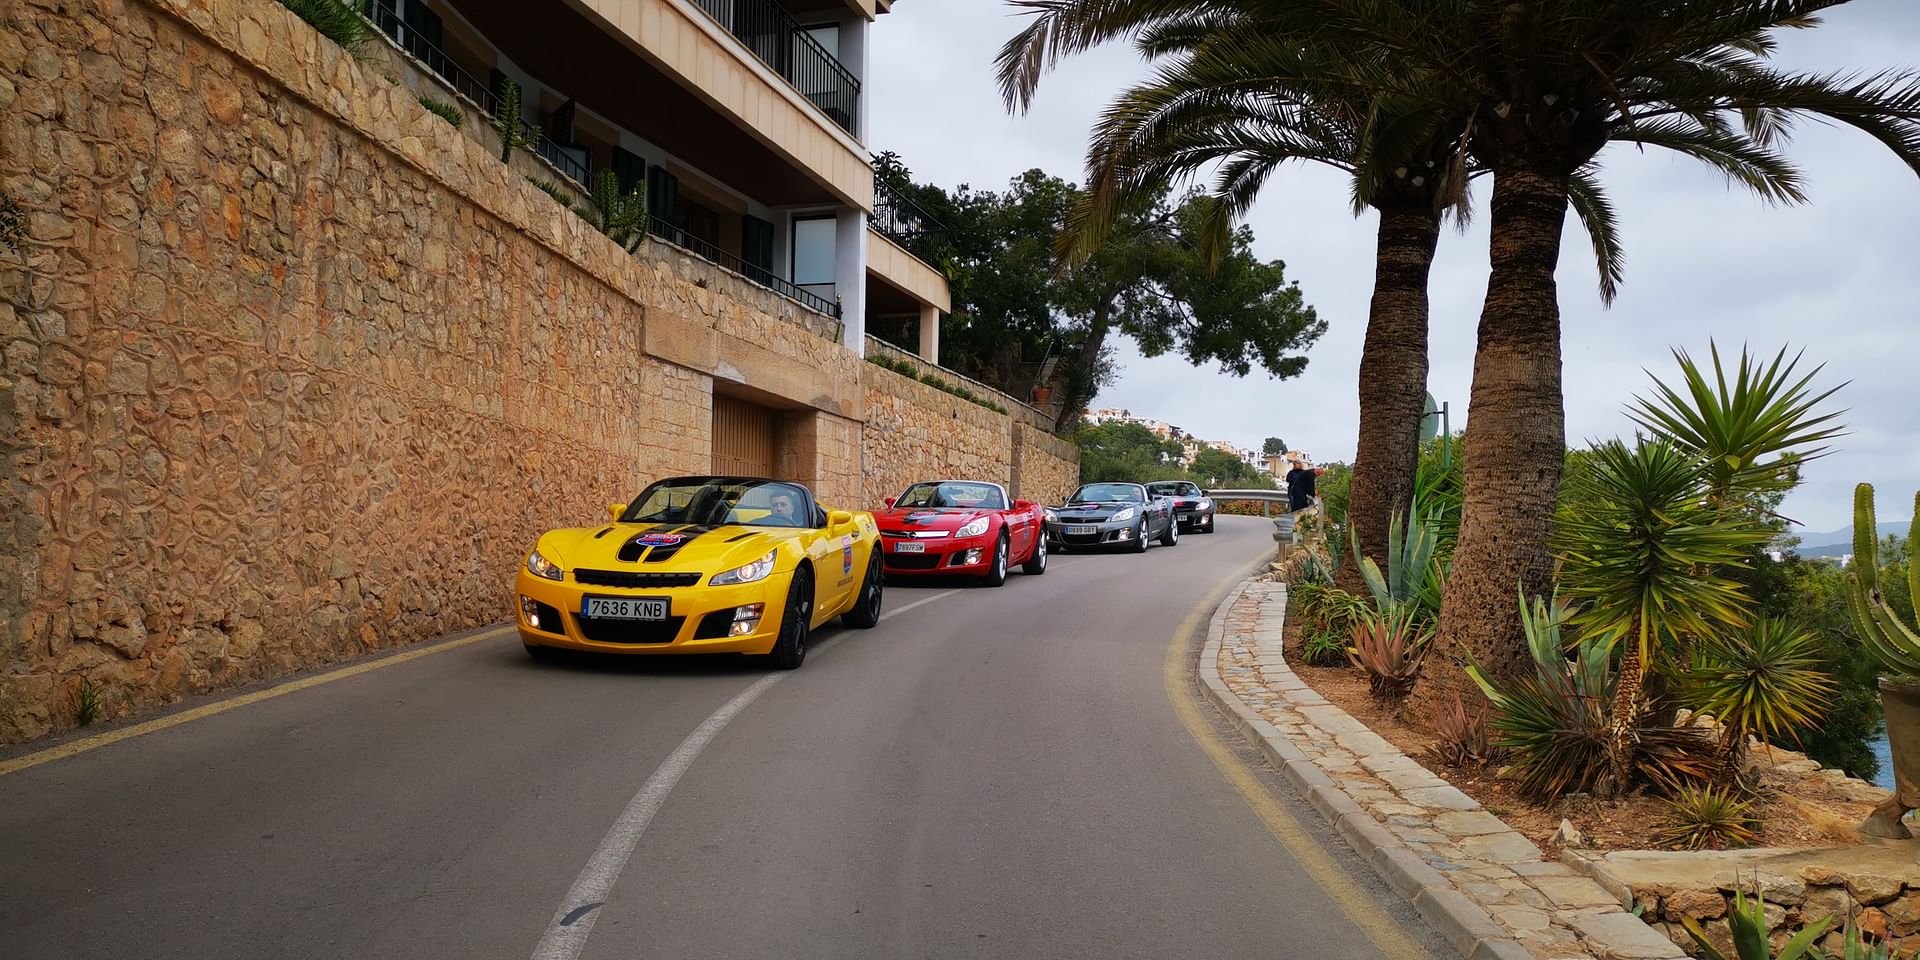 syg Topmøde skrå Discover Mallorca with a cabrio sports car driving experience! | Symbol  Travel